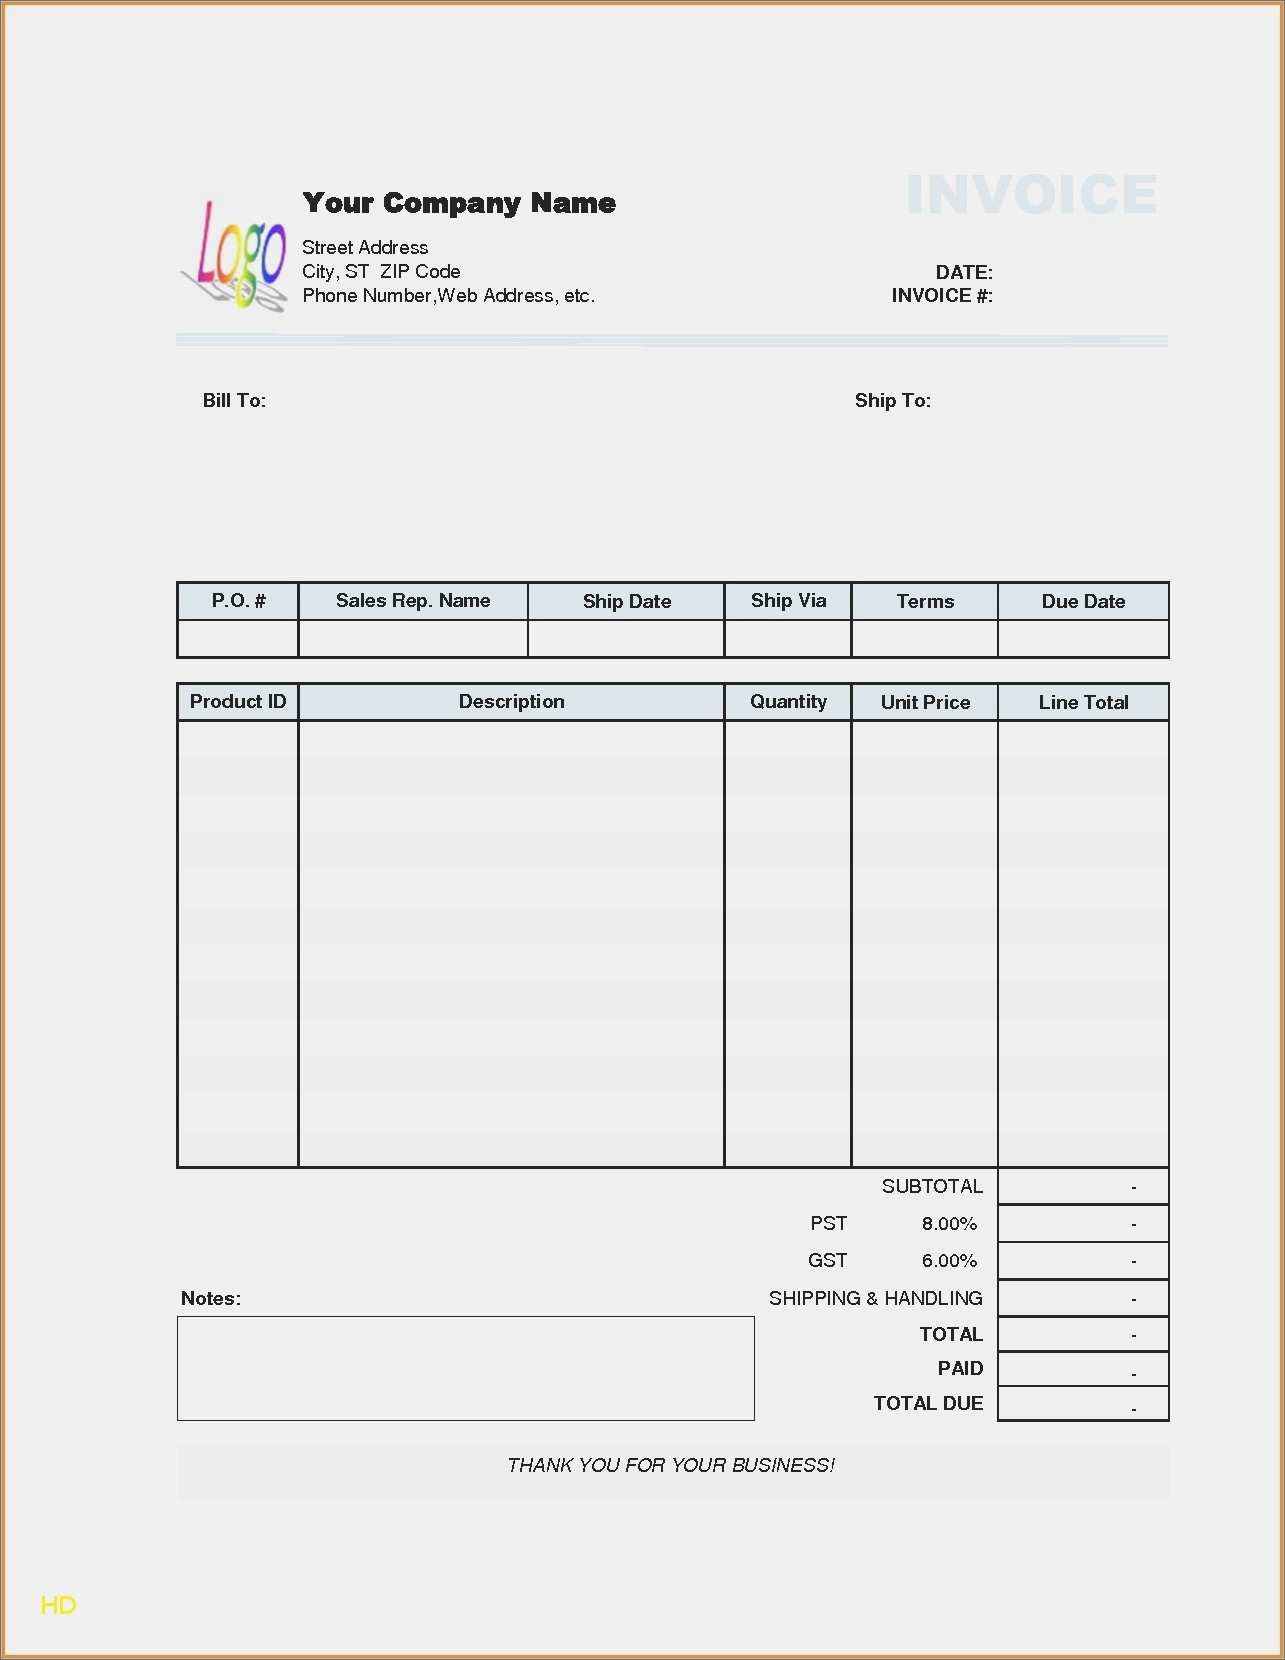 21 Online Self Employed Consultant Invoice Template Uk Psd File With Self Employed Consultant Invoice Template Uk Cards Design Templates